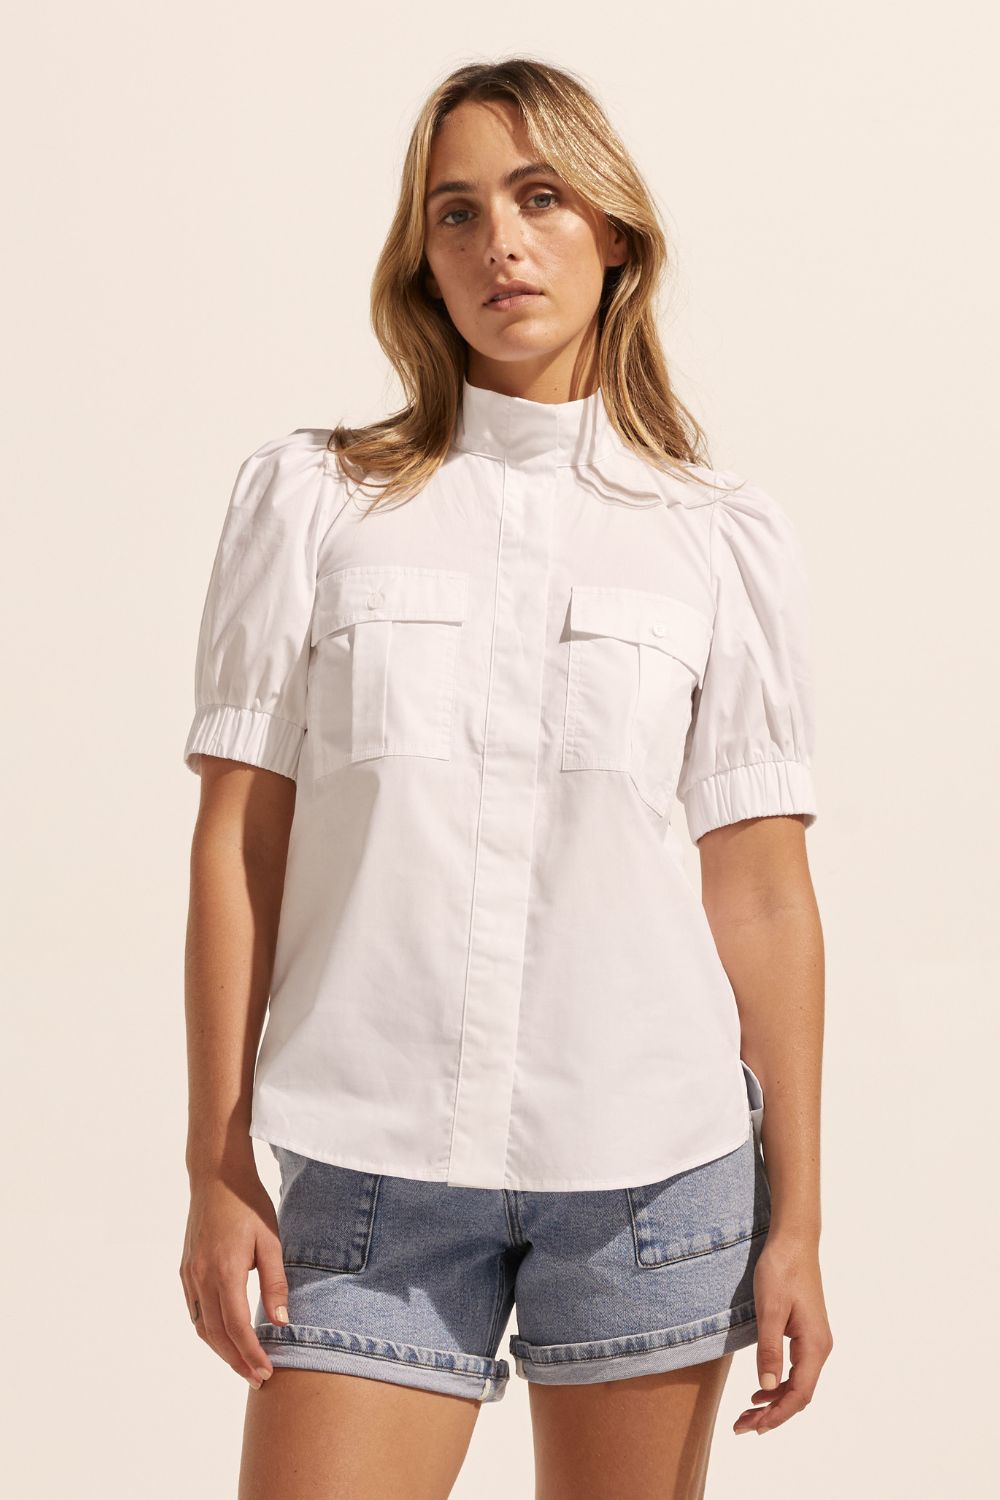 white, high neck, button up shirt, top